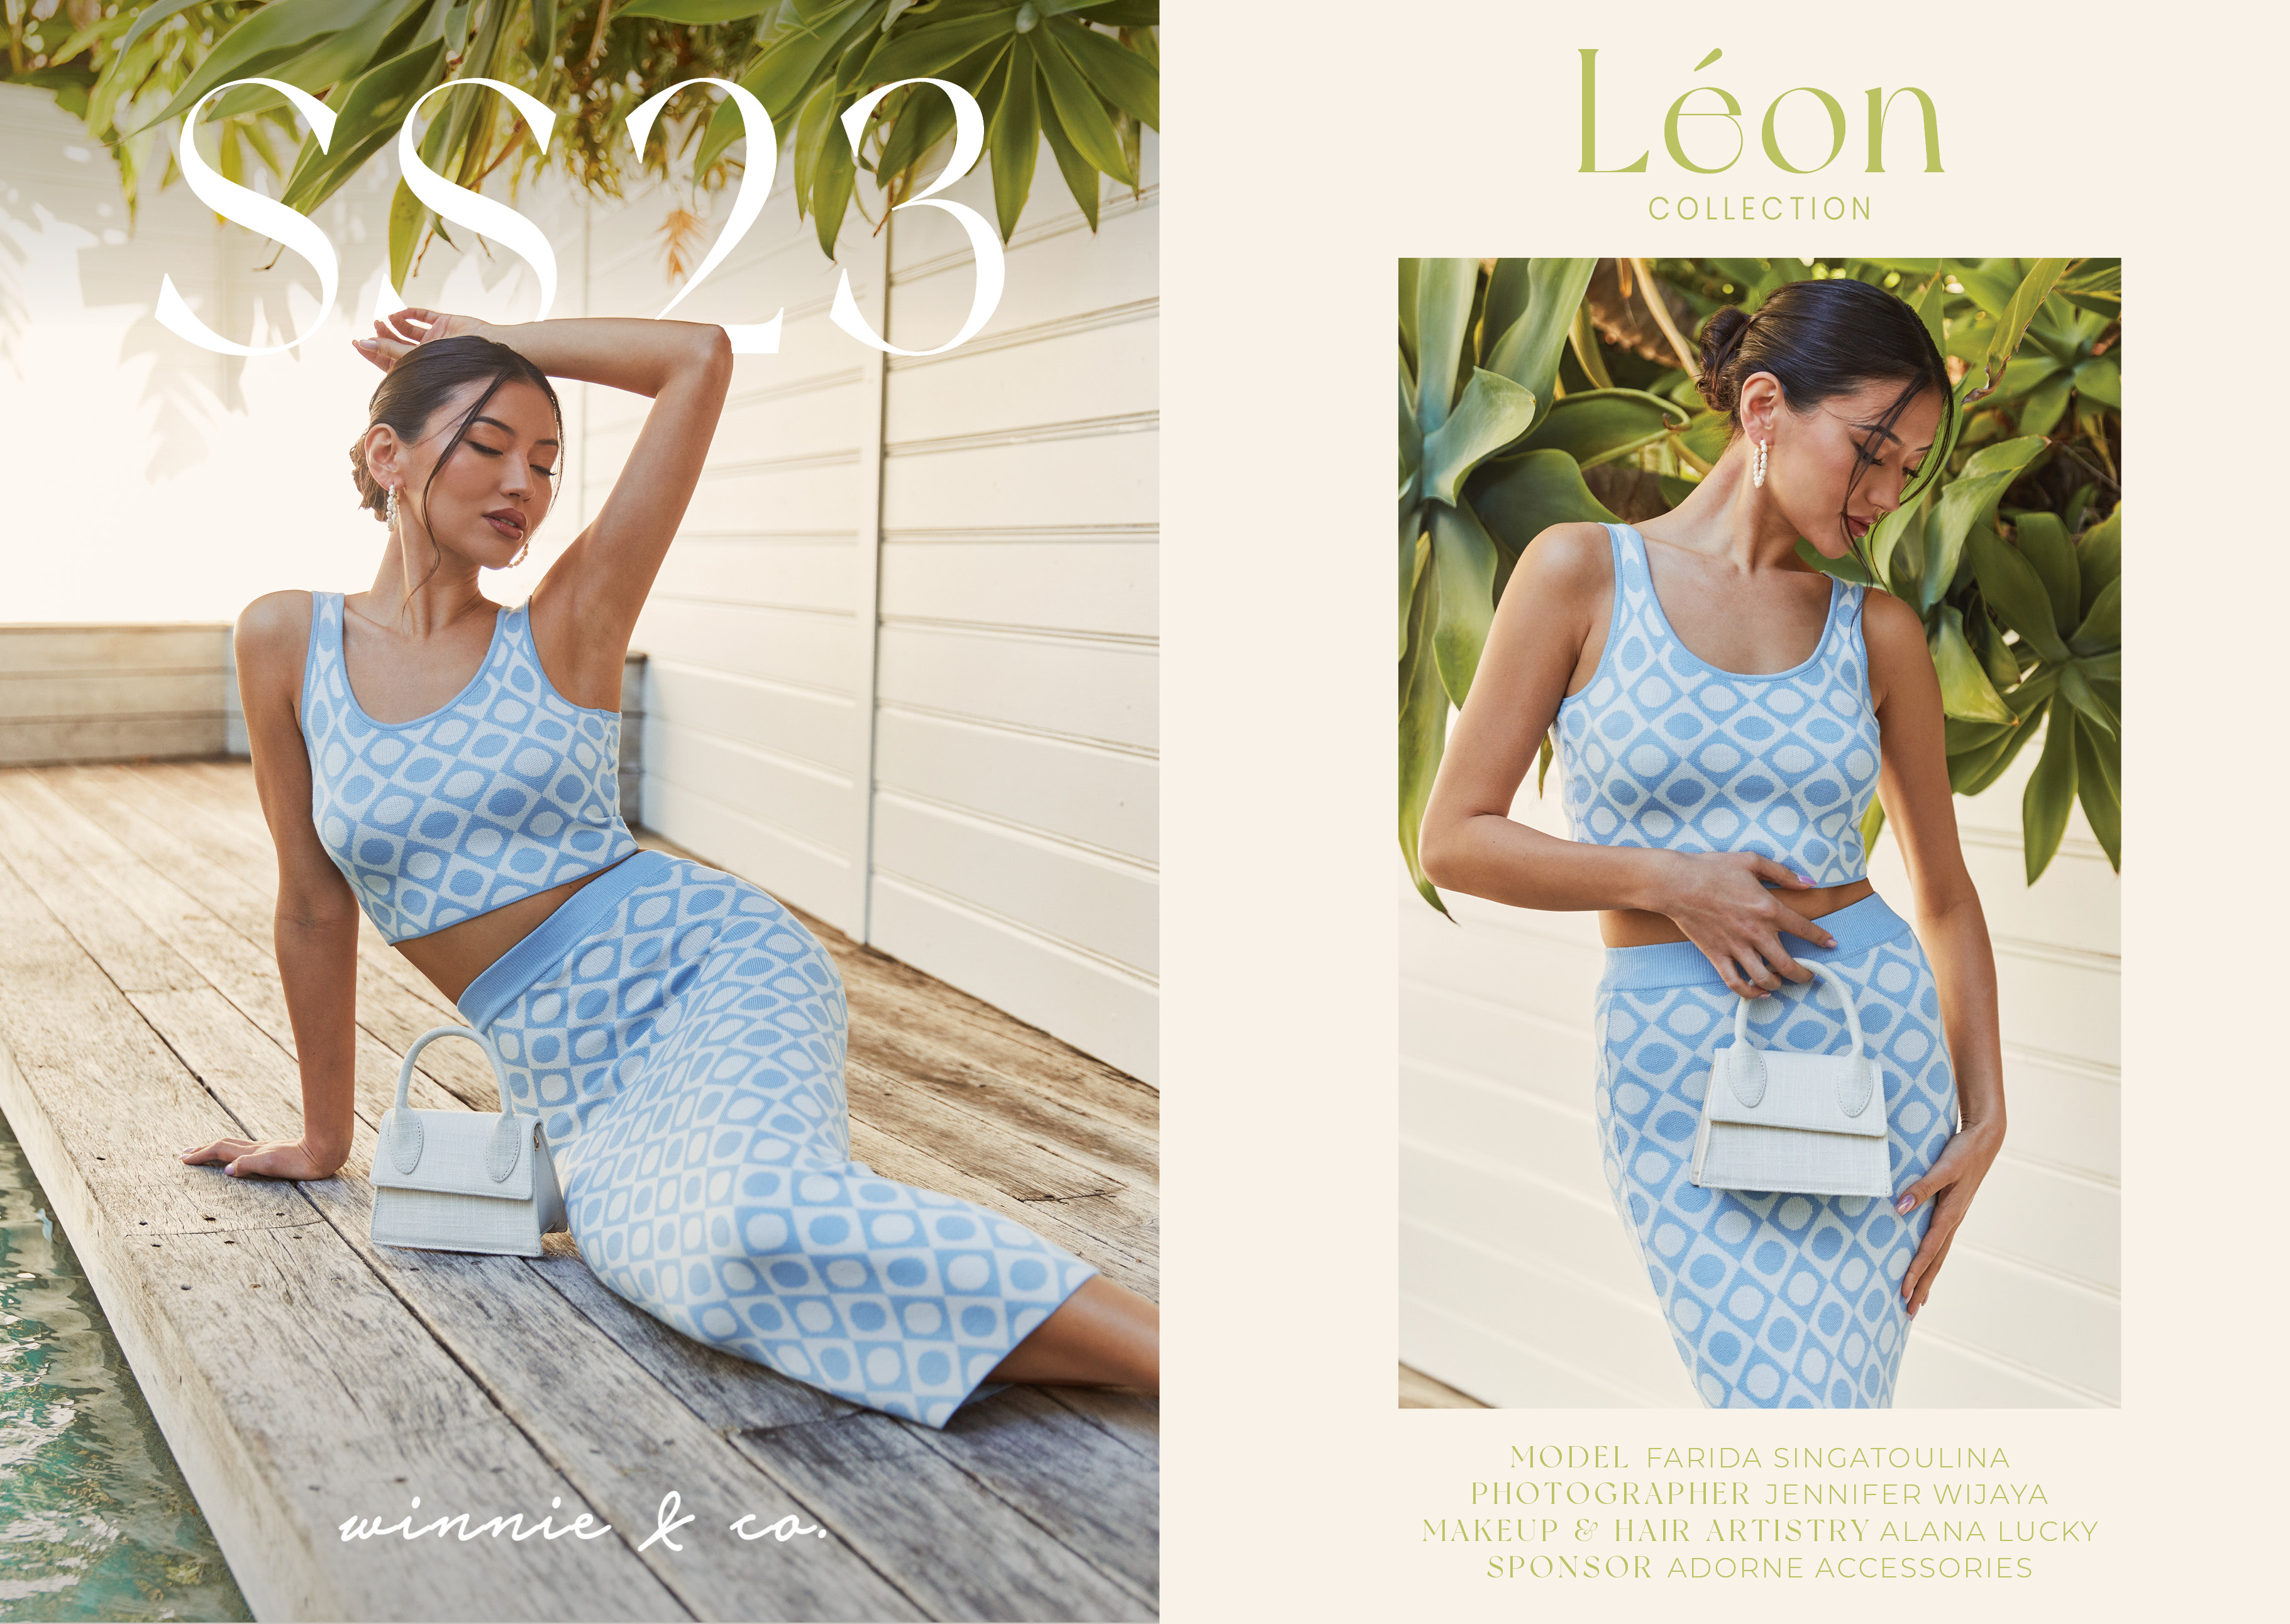 Winnie & Co. Leon Collection